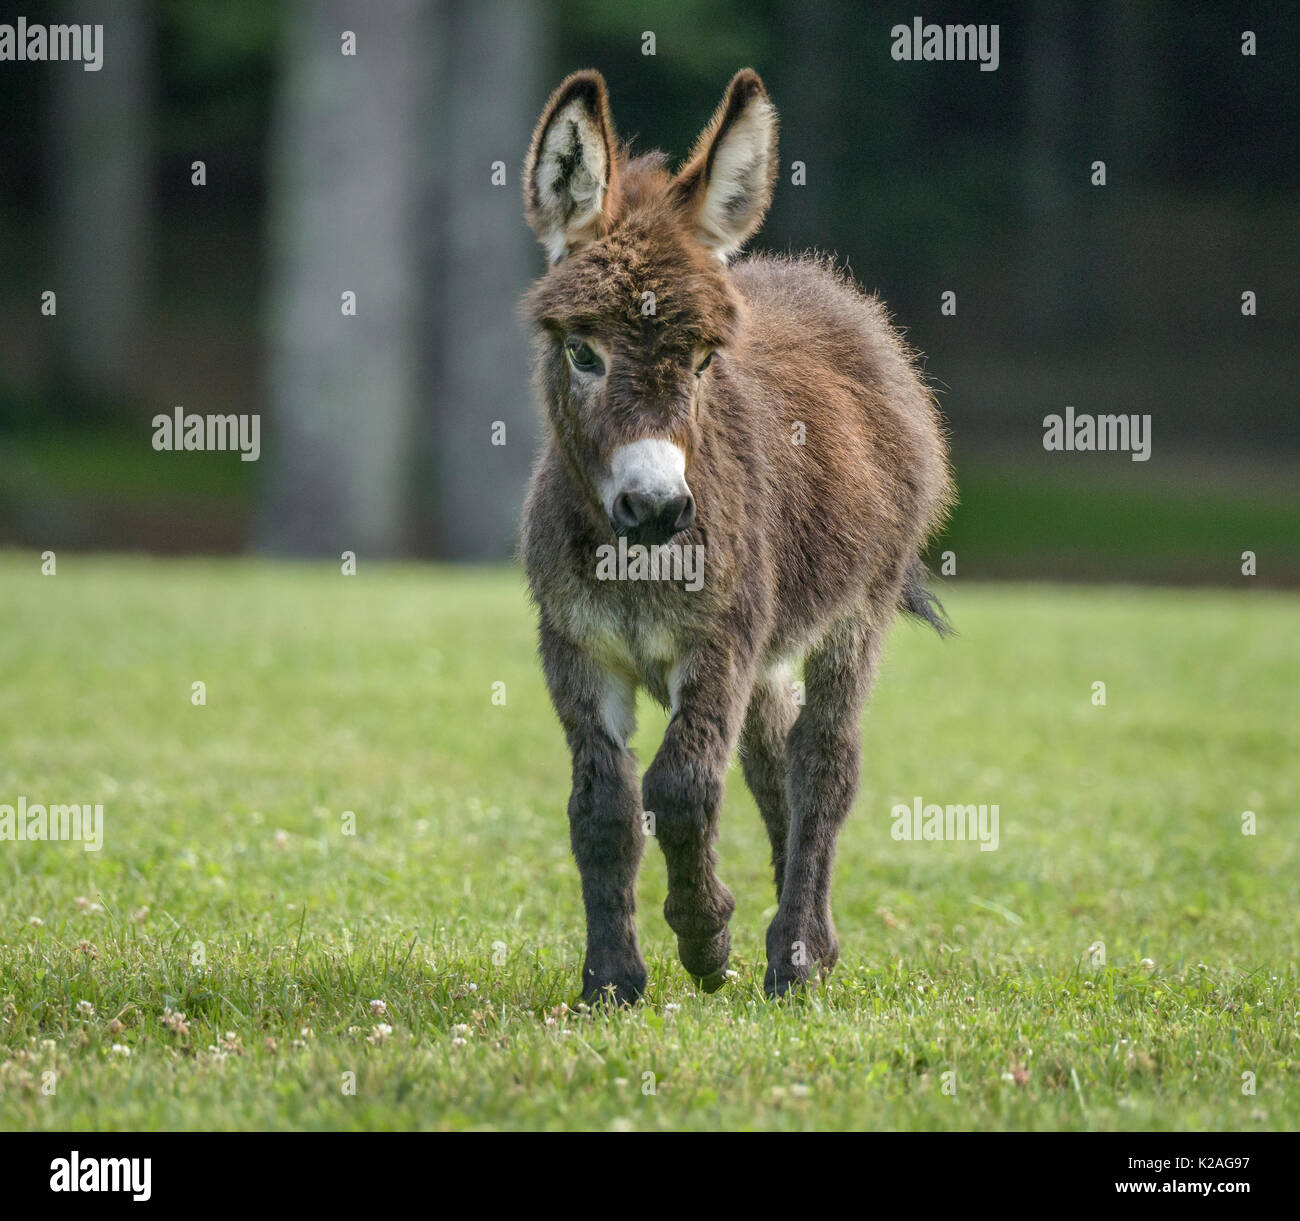 Miniature donkey foal Stock Photo